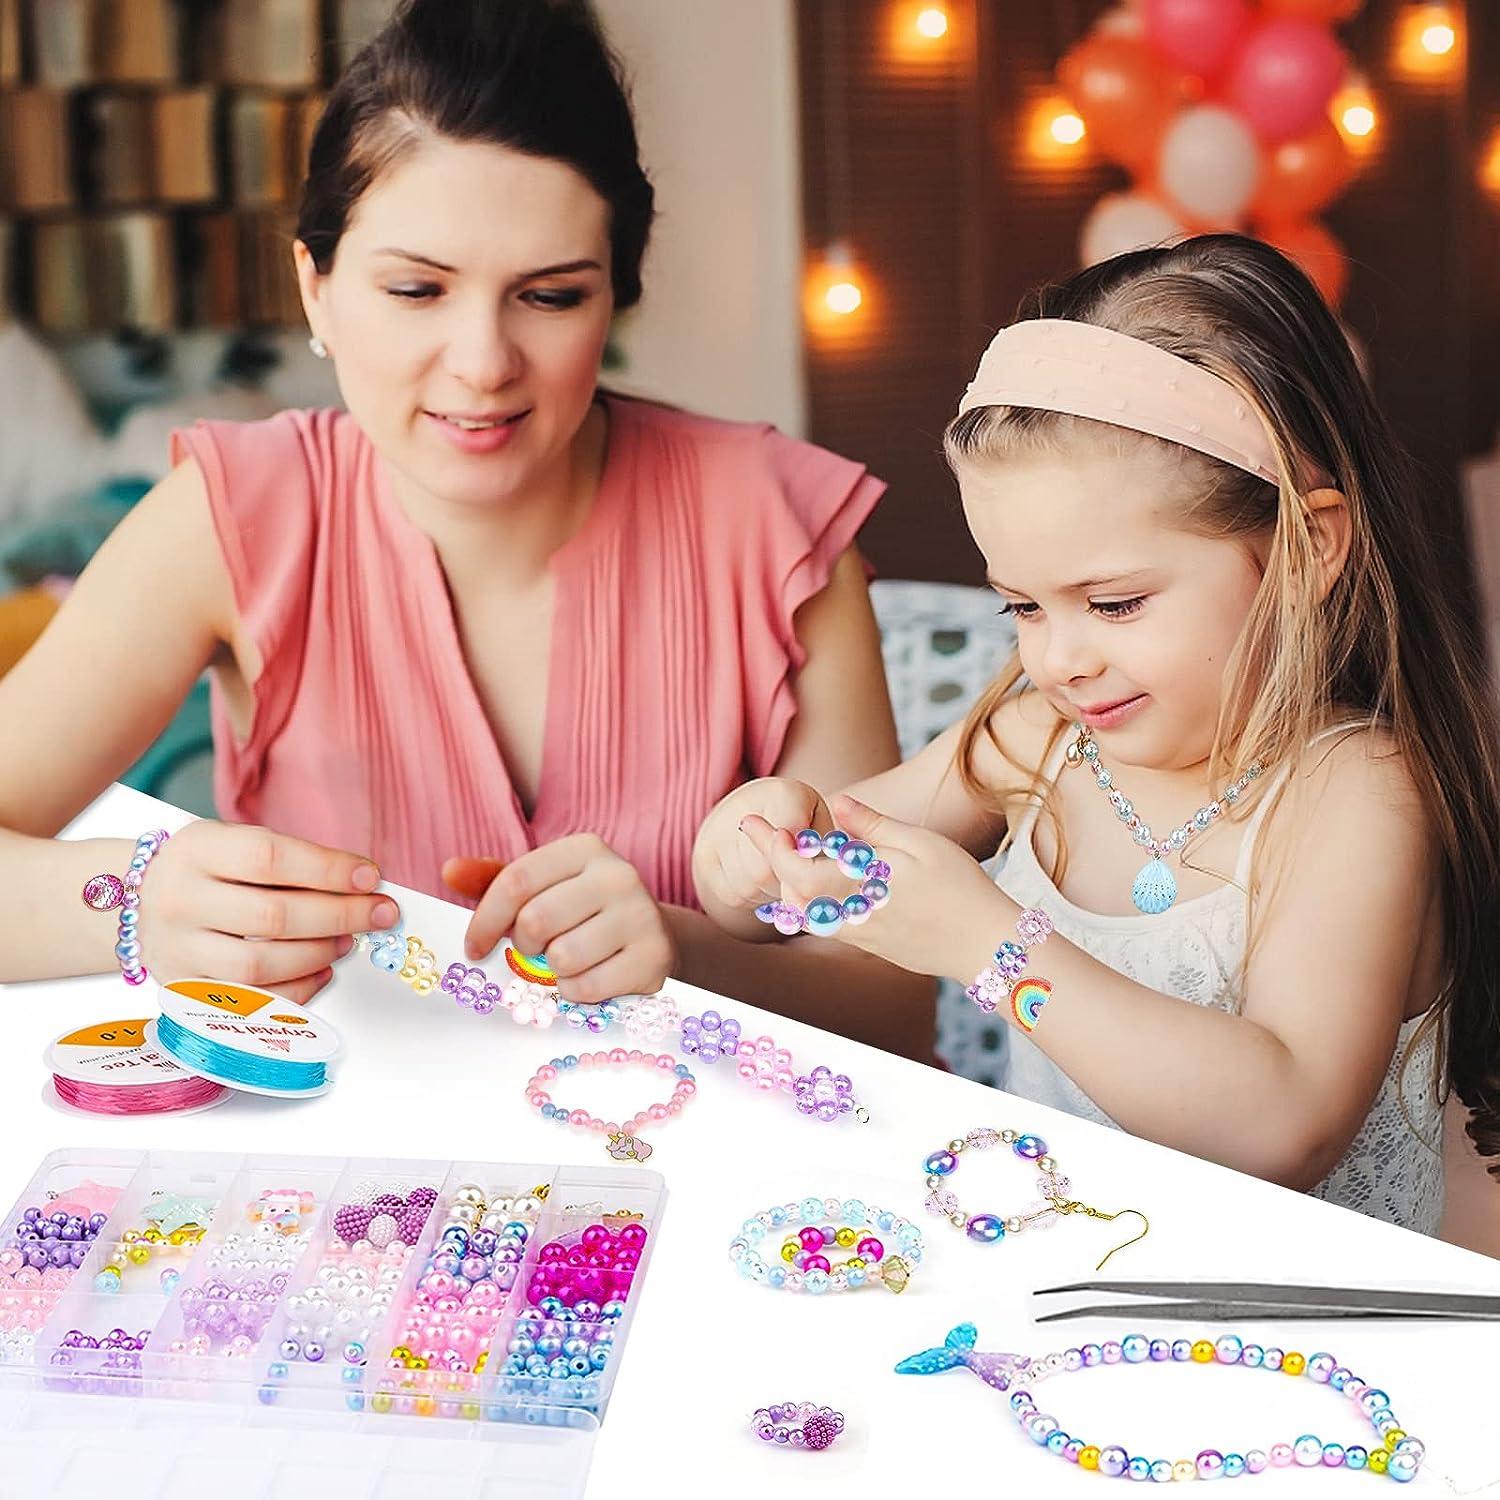 Rainbows and Pearls DIY Jewelry Kit